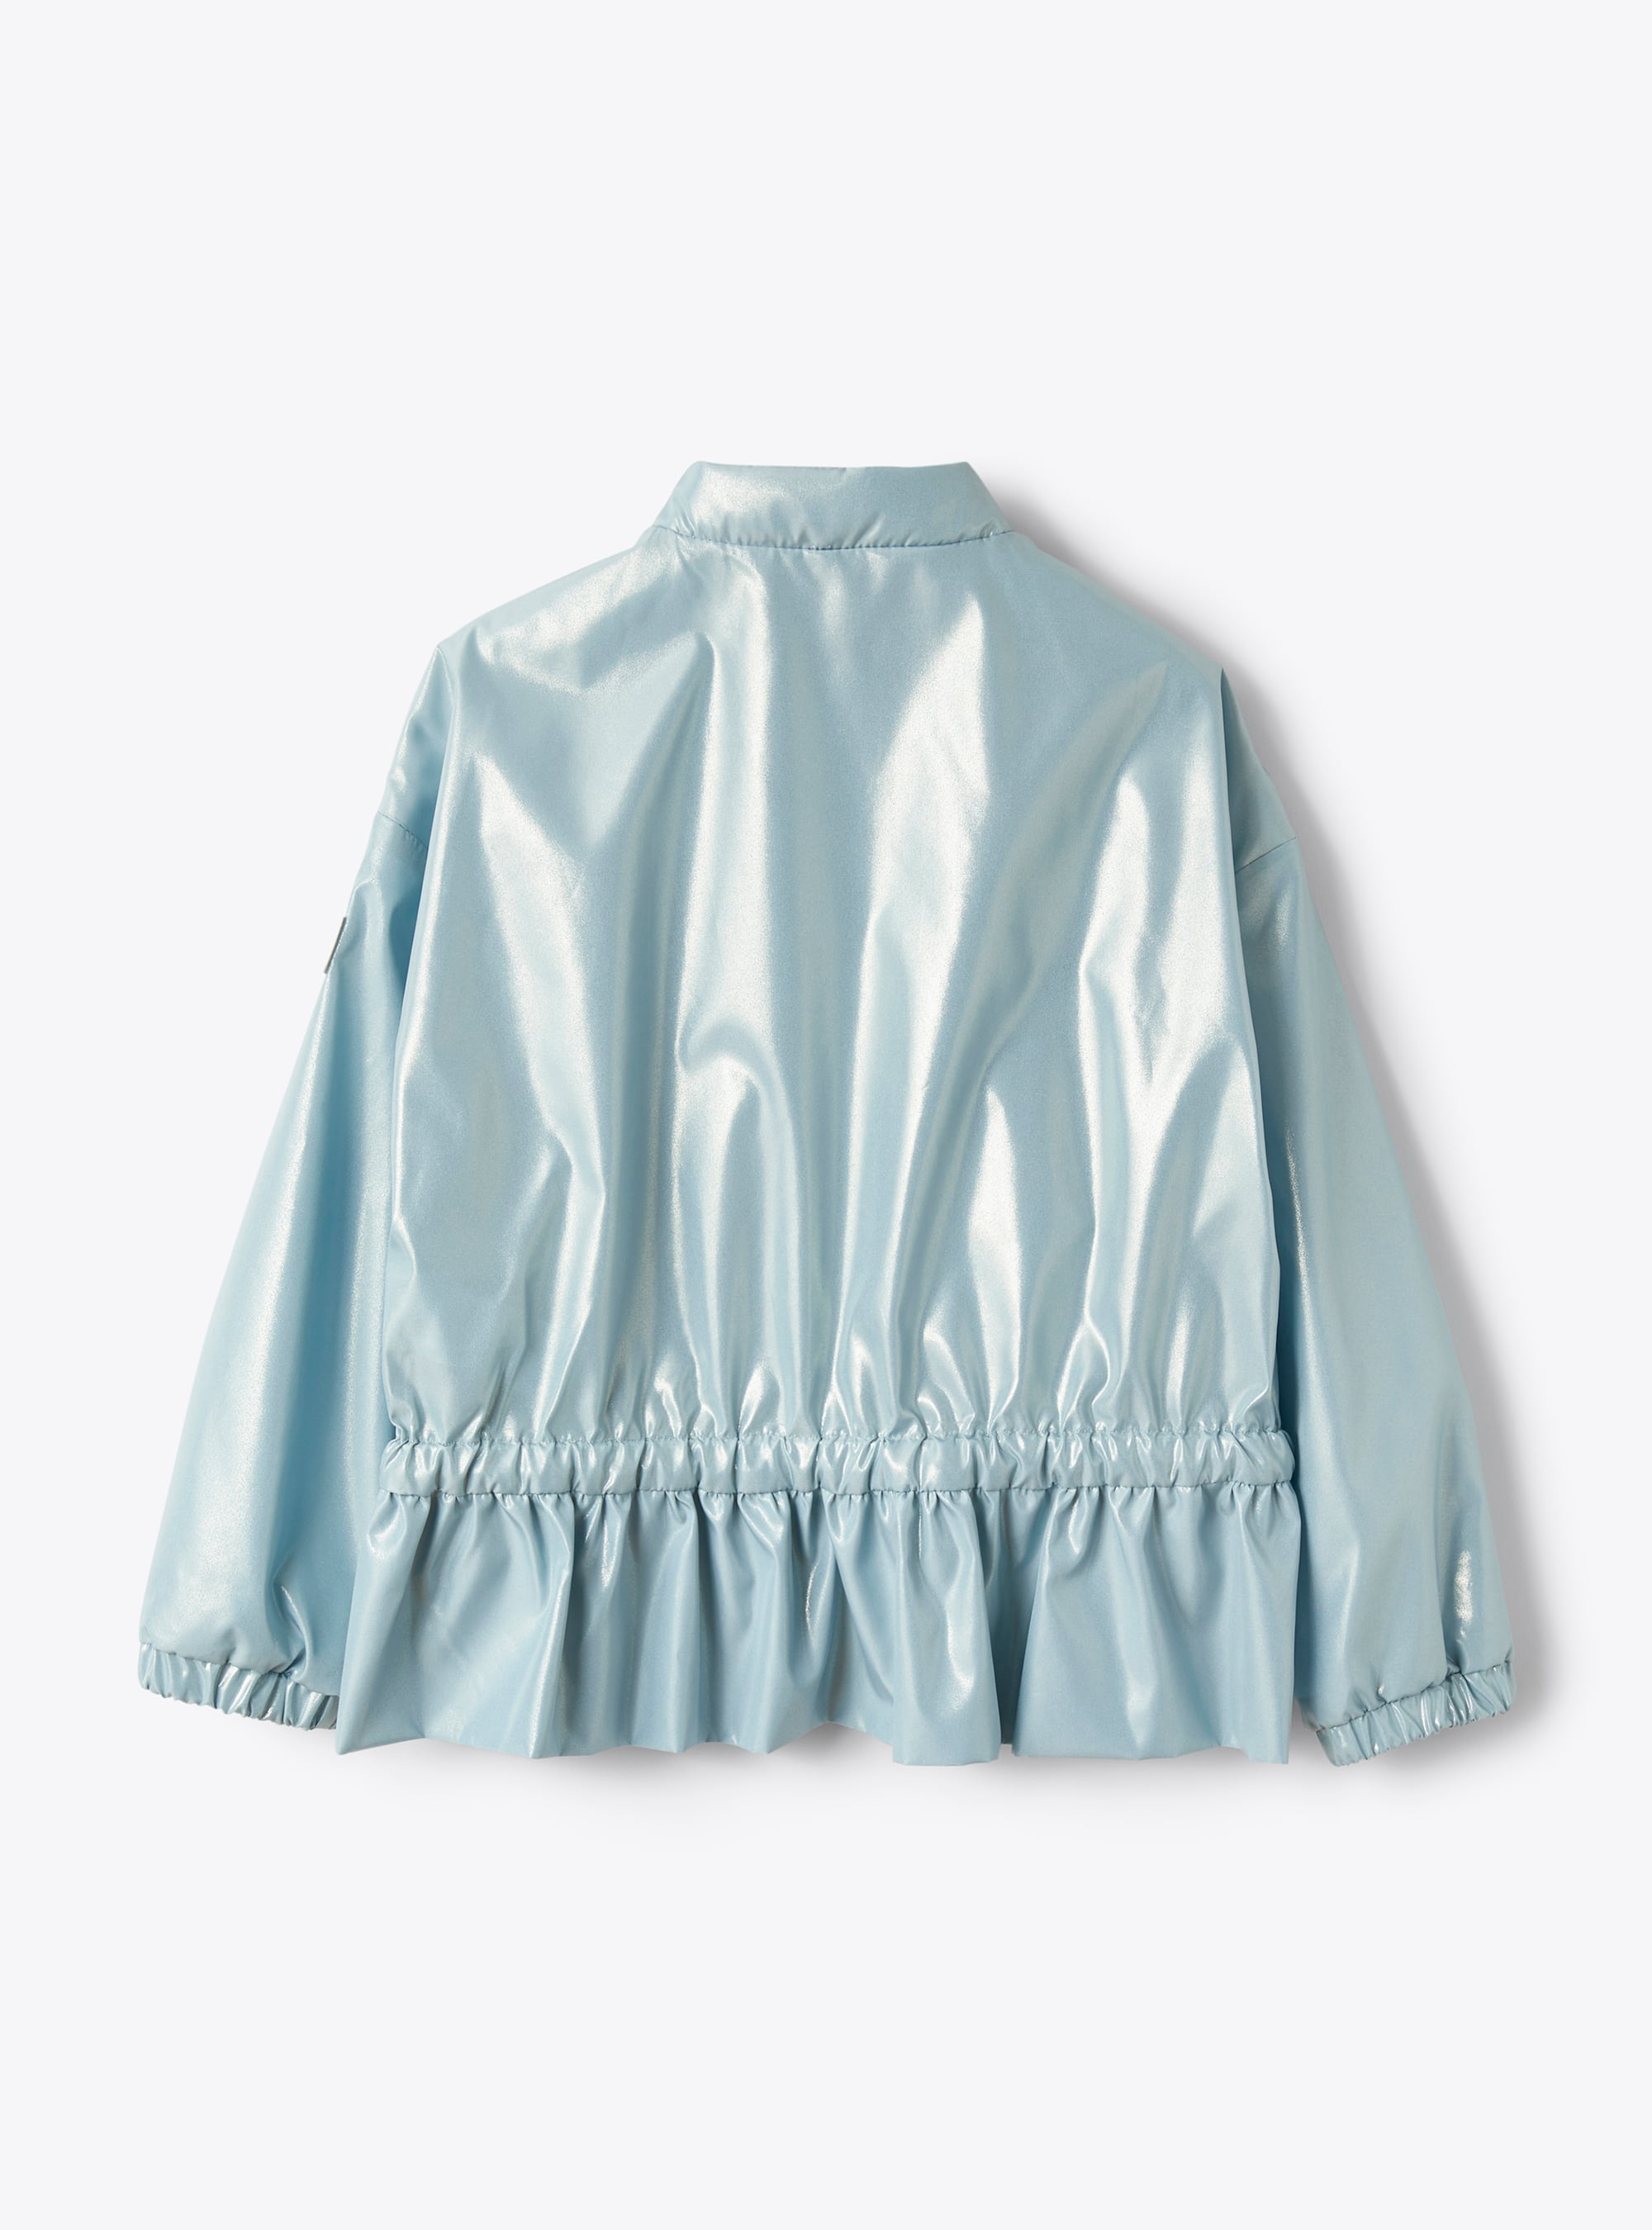 Jacke aus laminiertem Nylon - Hellblau | Il Gufo